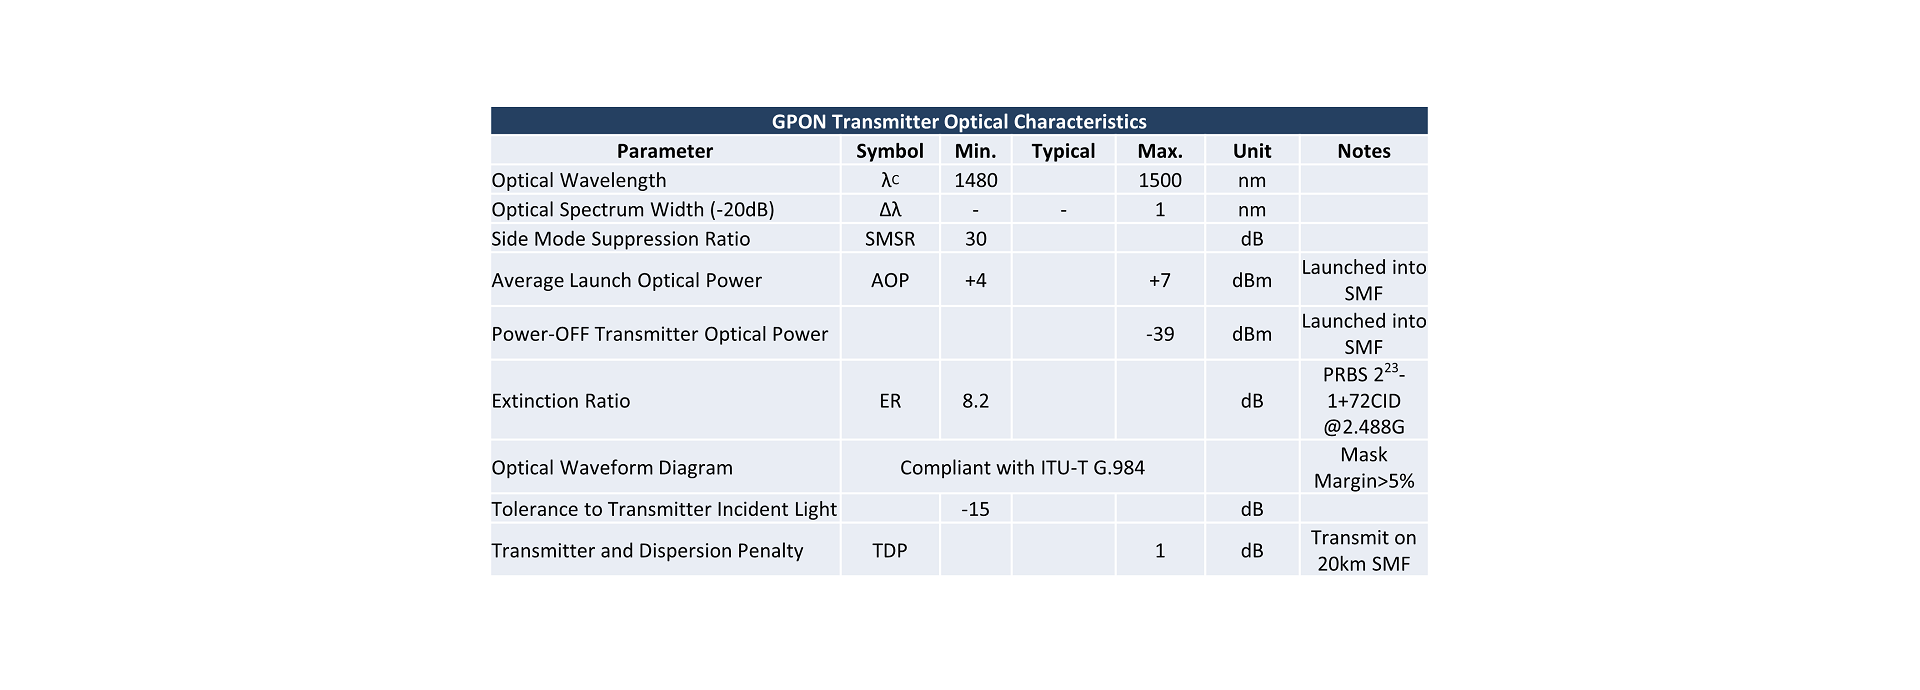 GPON Transmitter Optical Characteristics